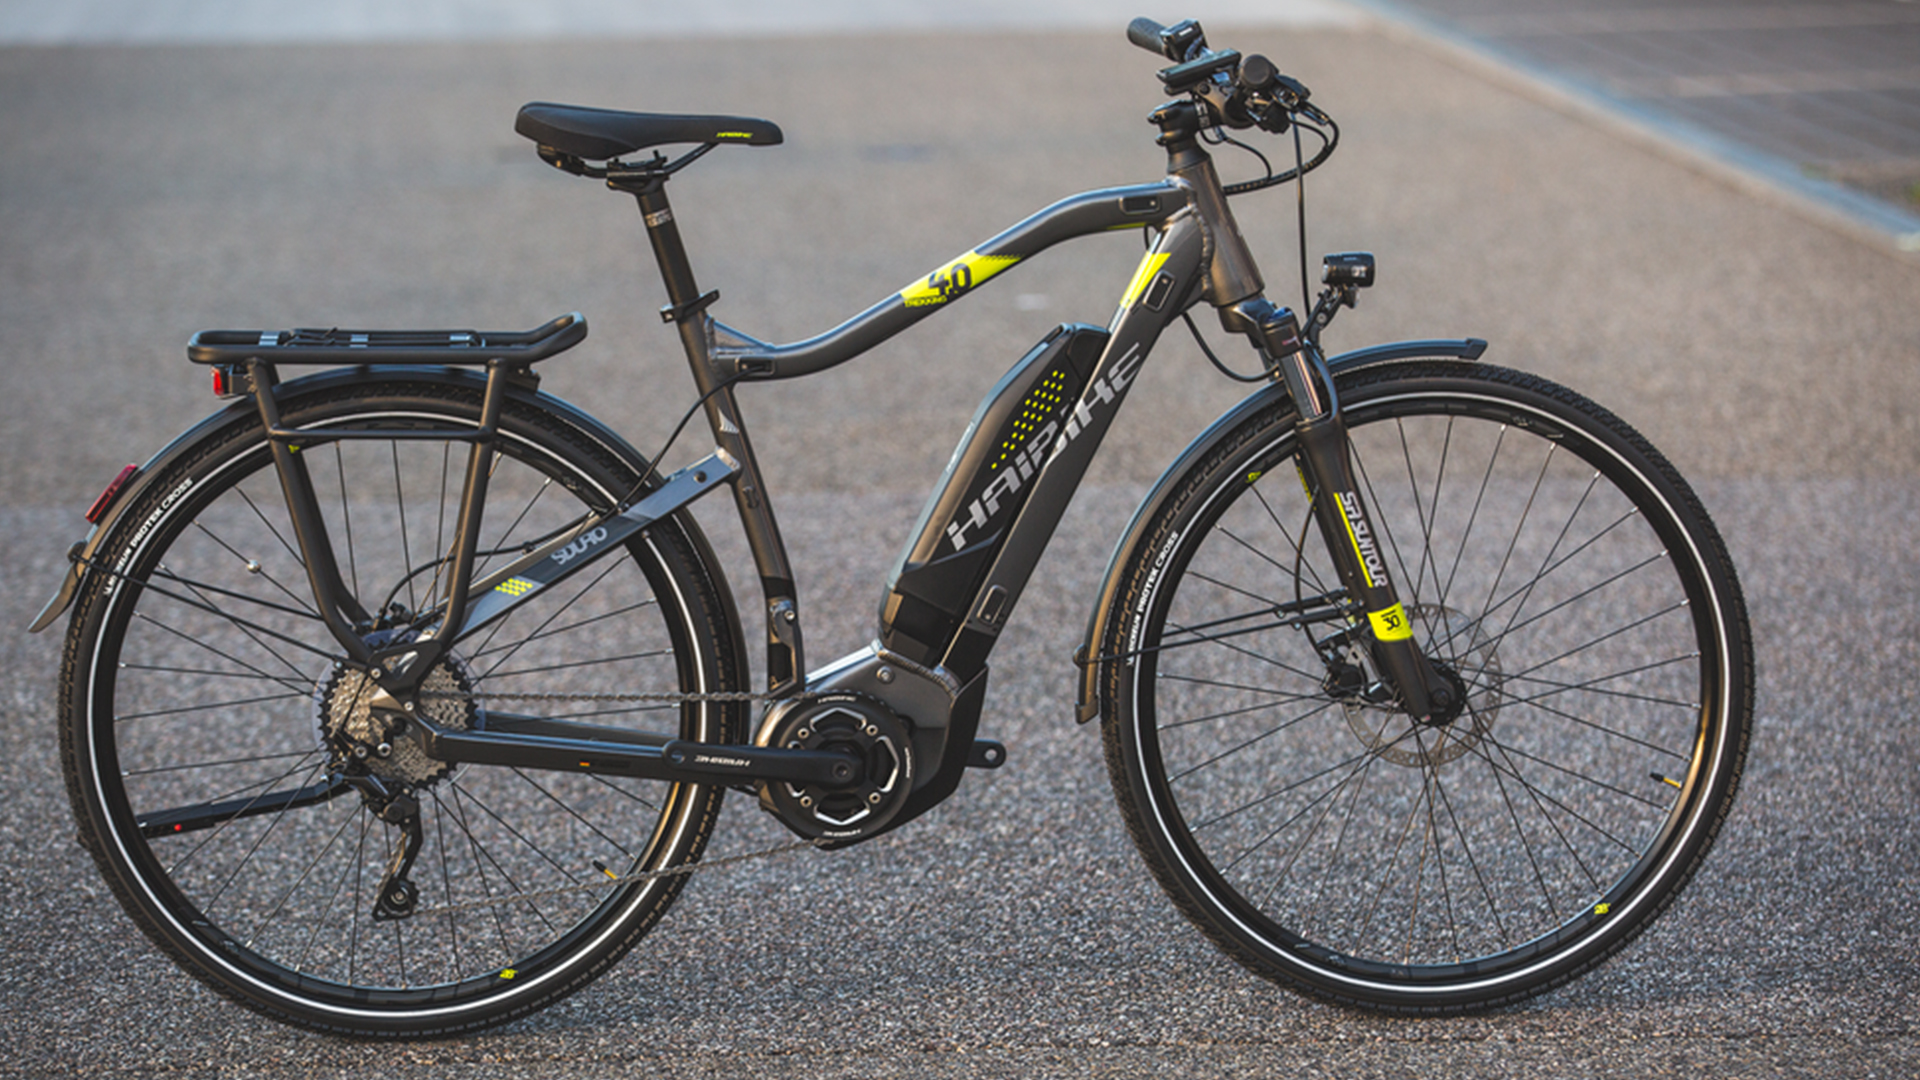 sDuro 4.0 electric bike hybrid workhorse the intrepid commuter | T3